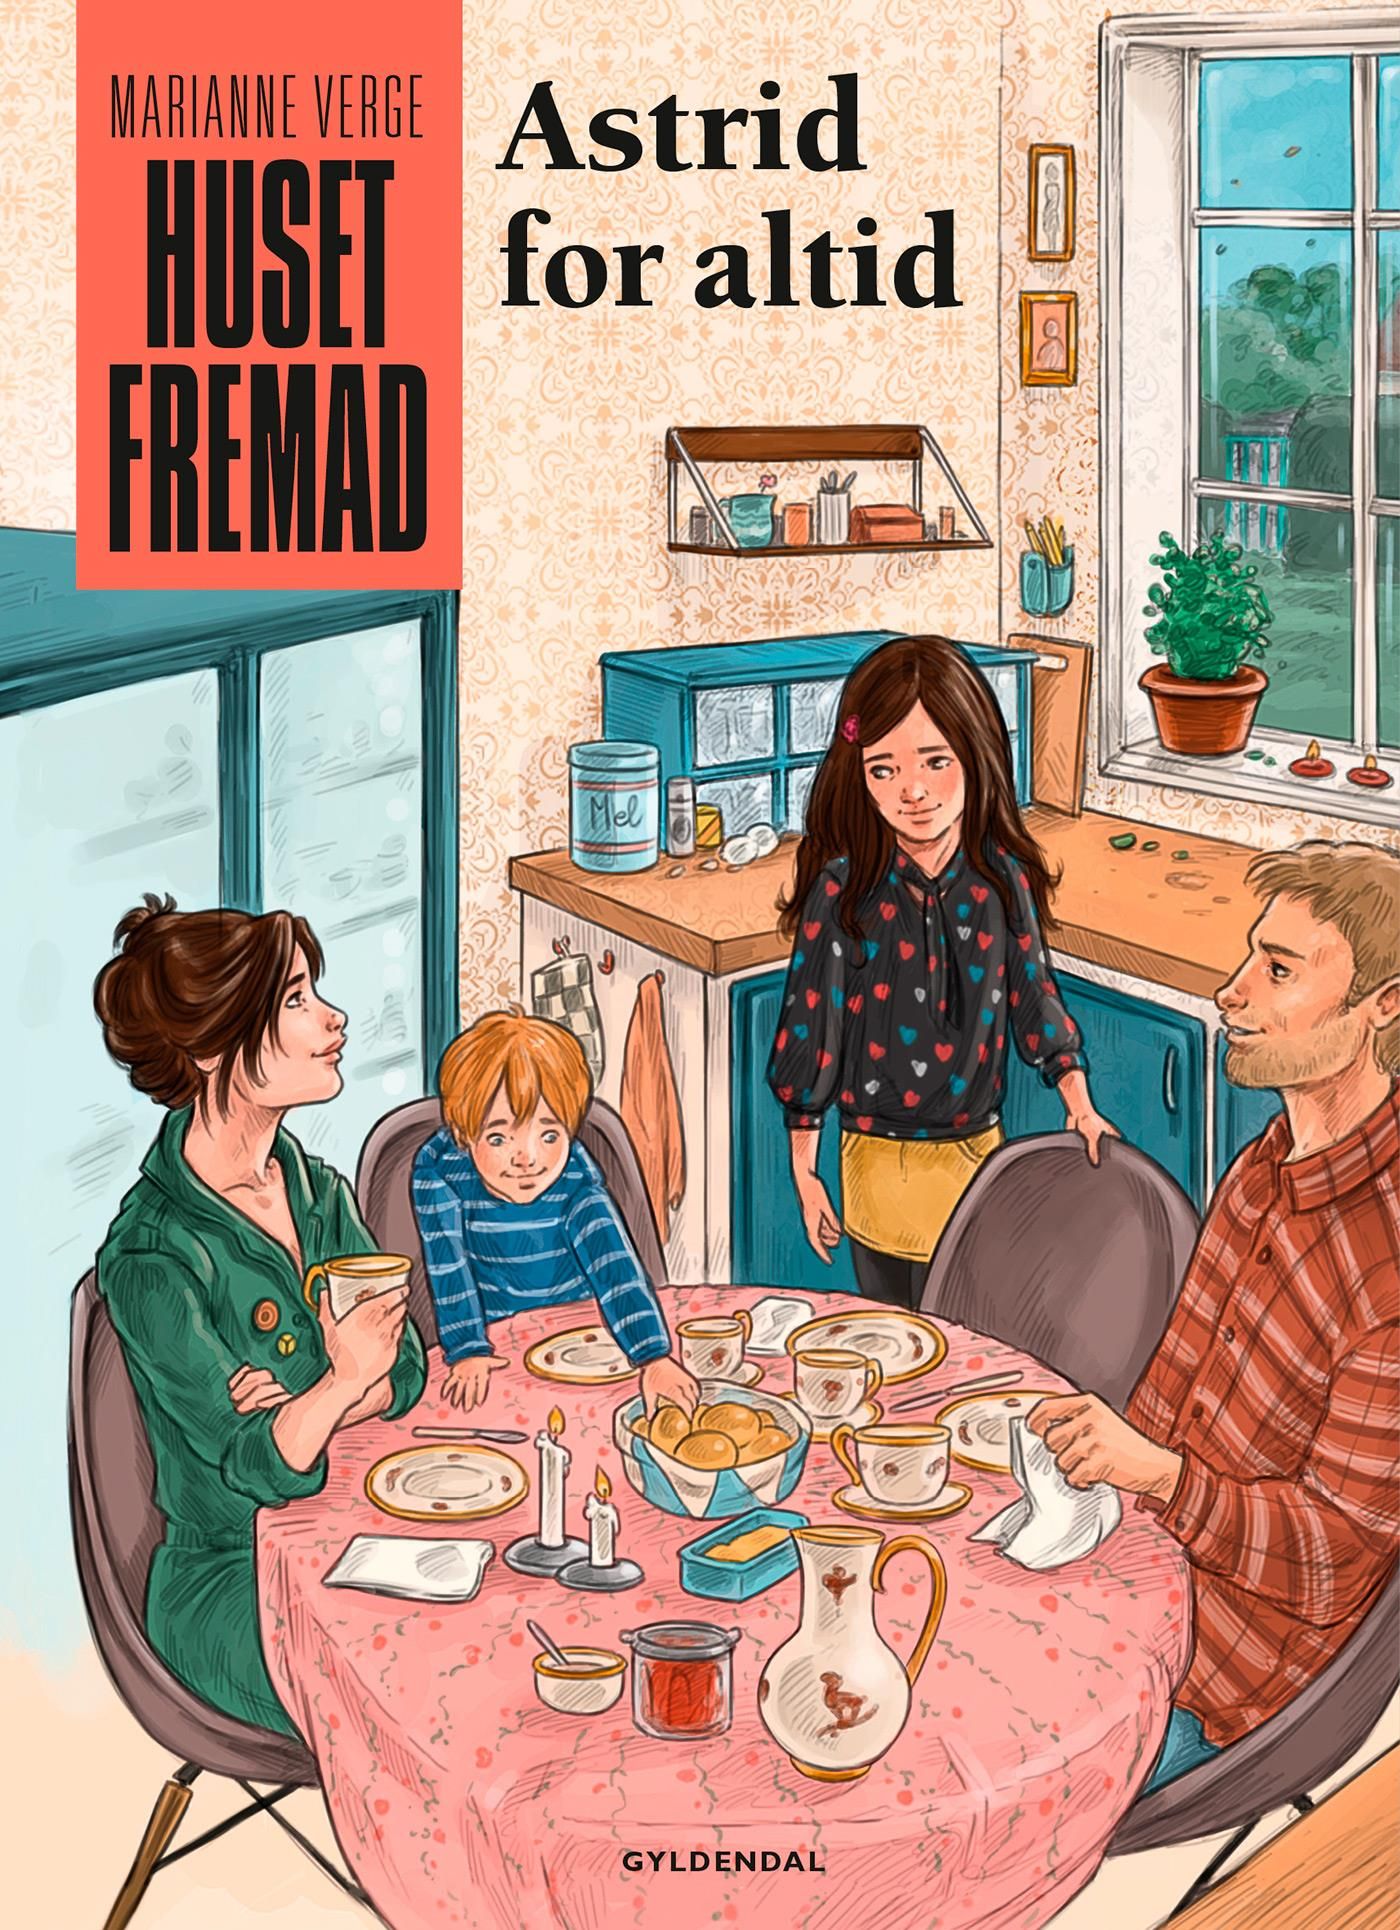 Huset Fremad - Astrid for altid, eBook by Marianne Verge